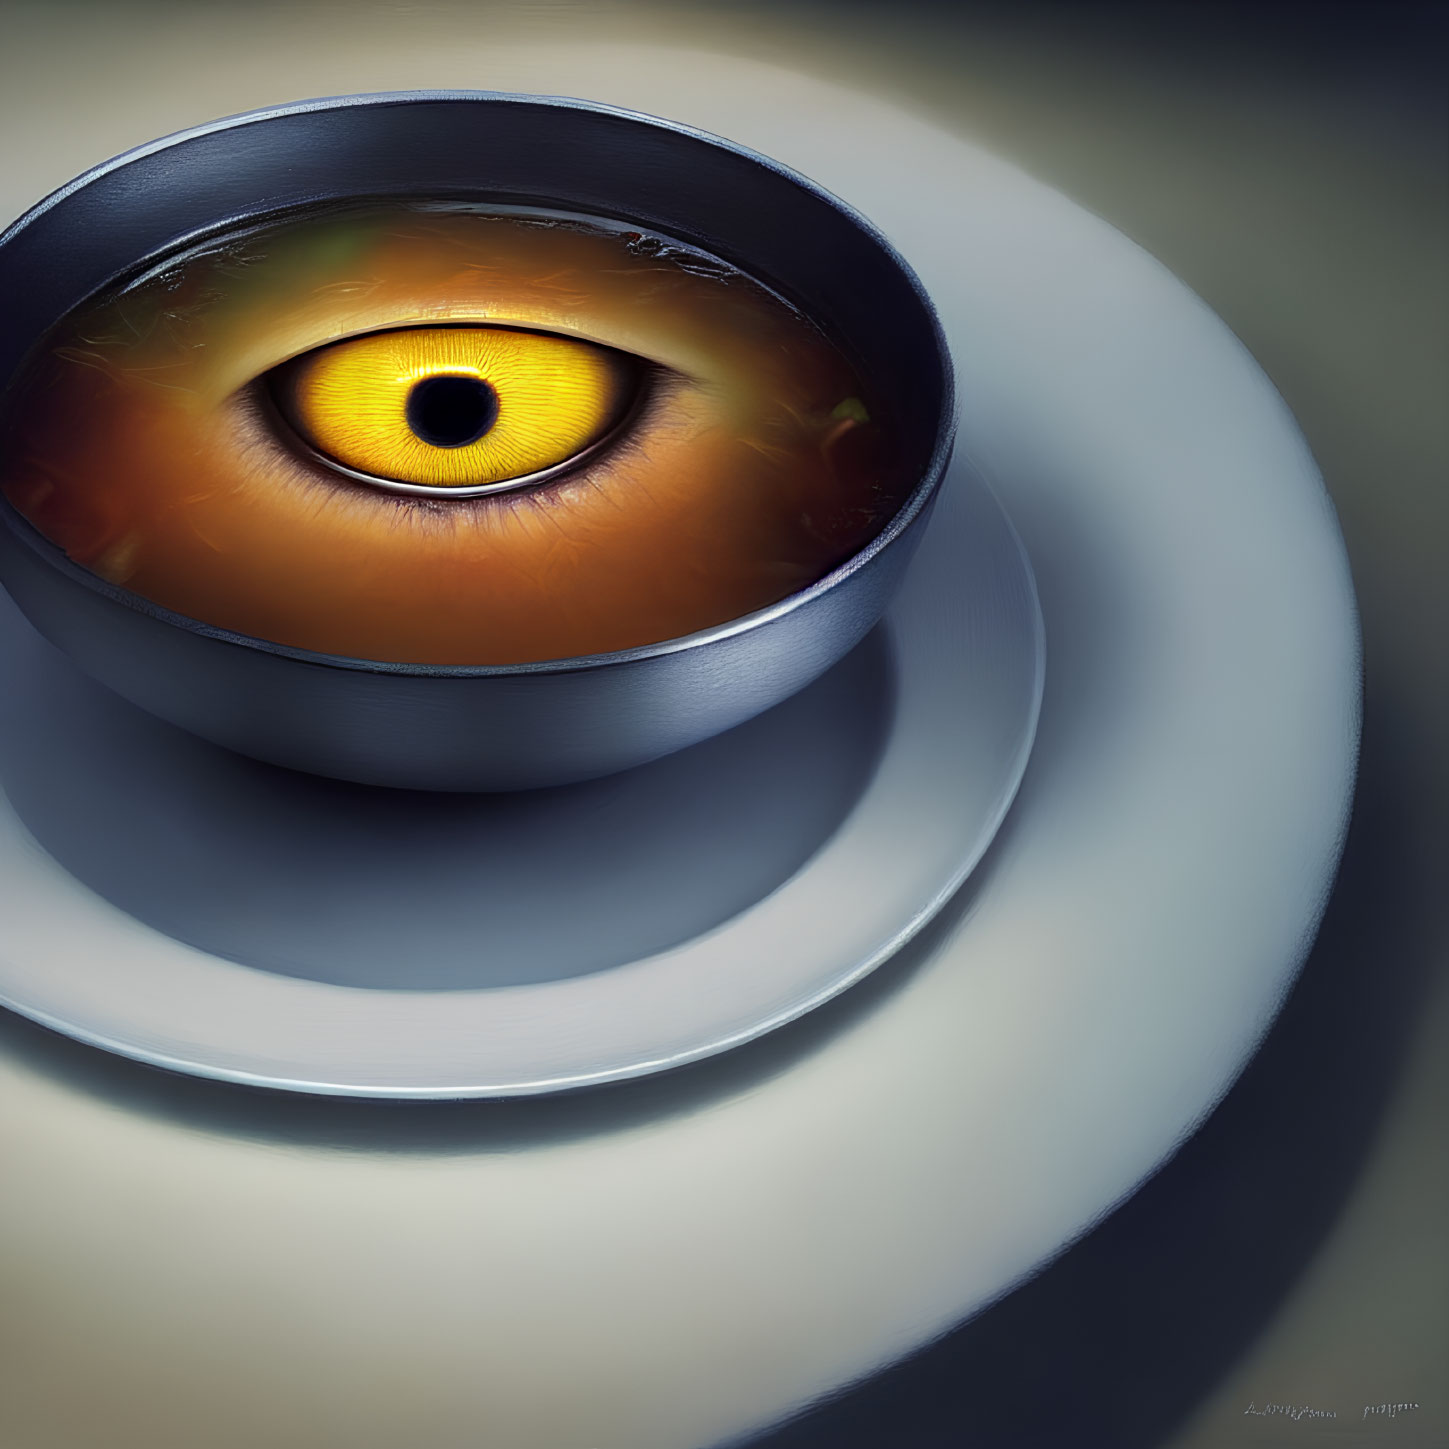 Vivid surreal artwork: yellow and orange eye in circular object